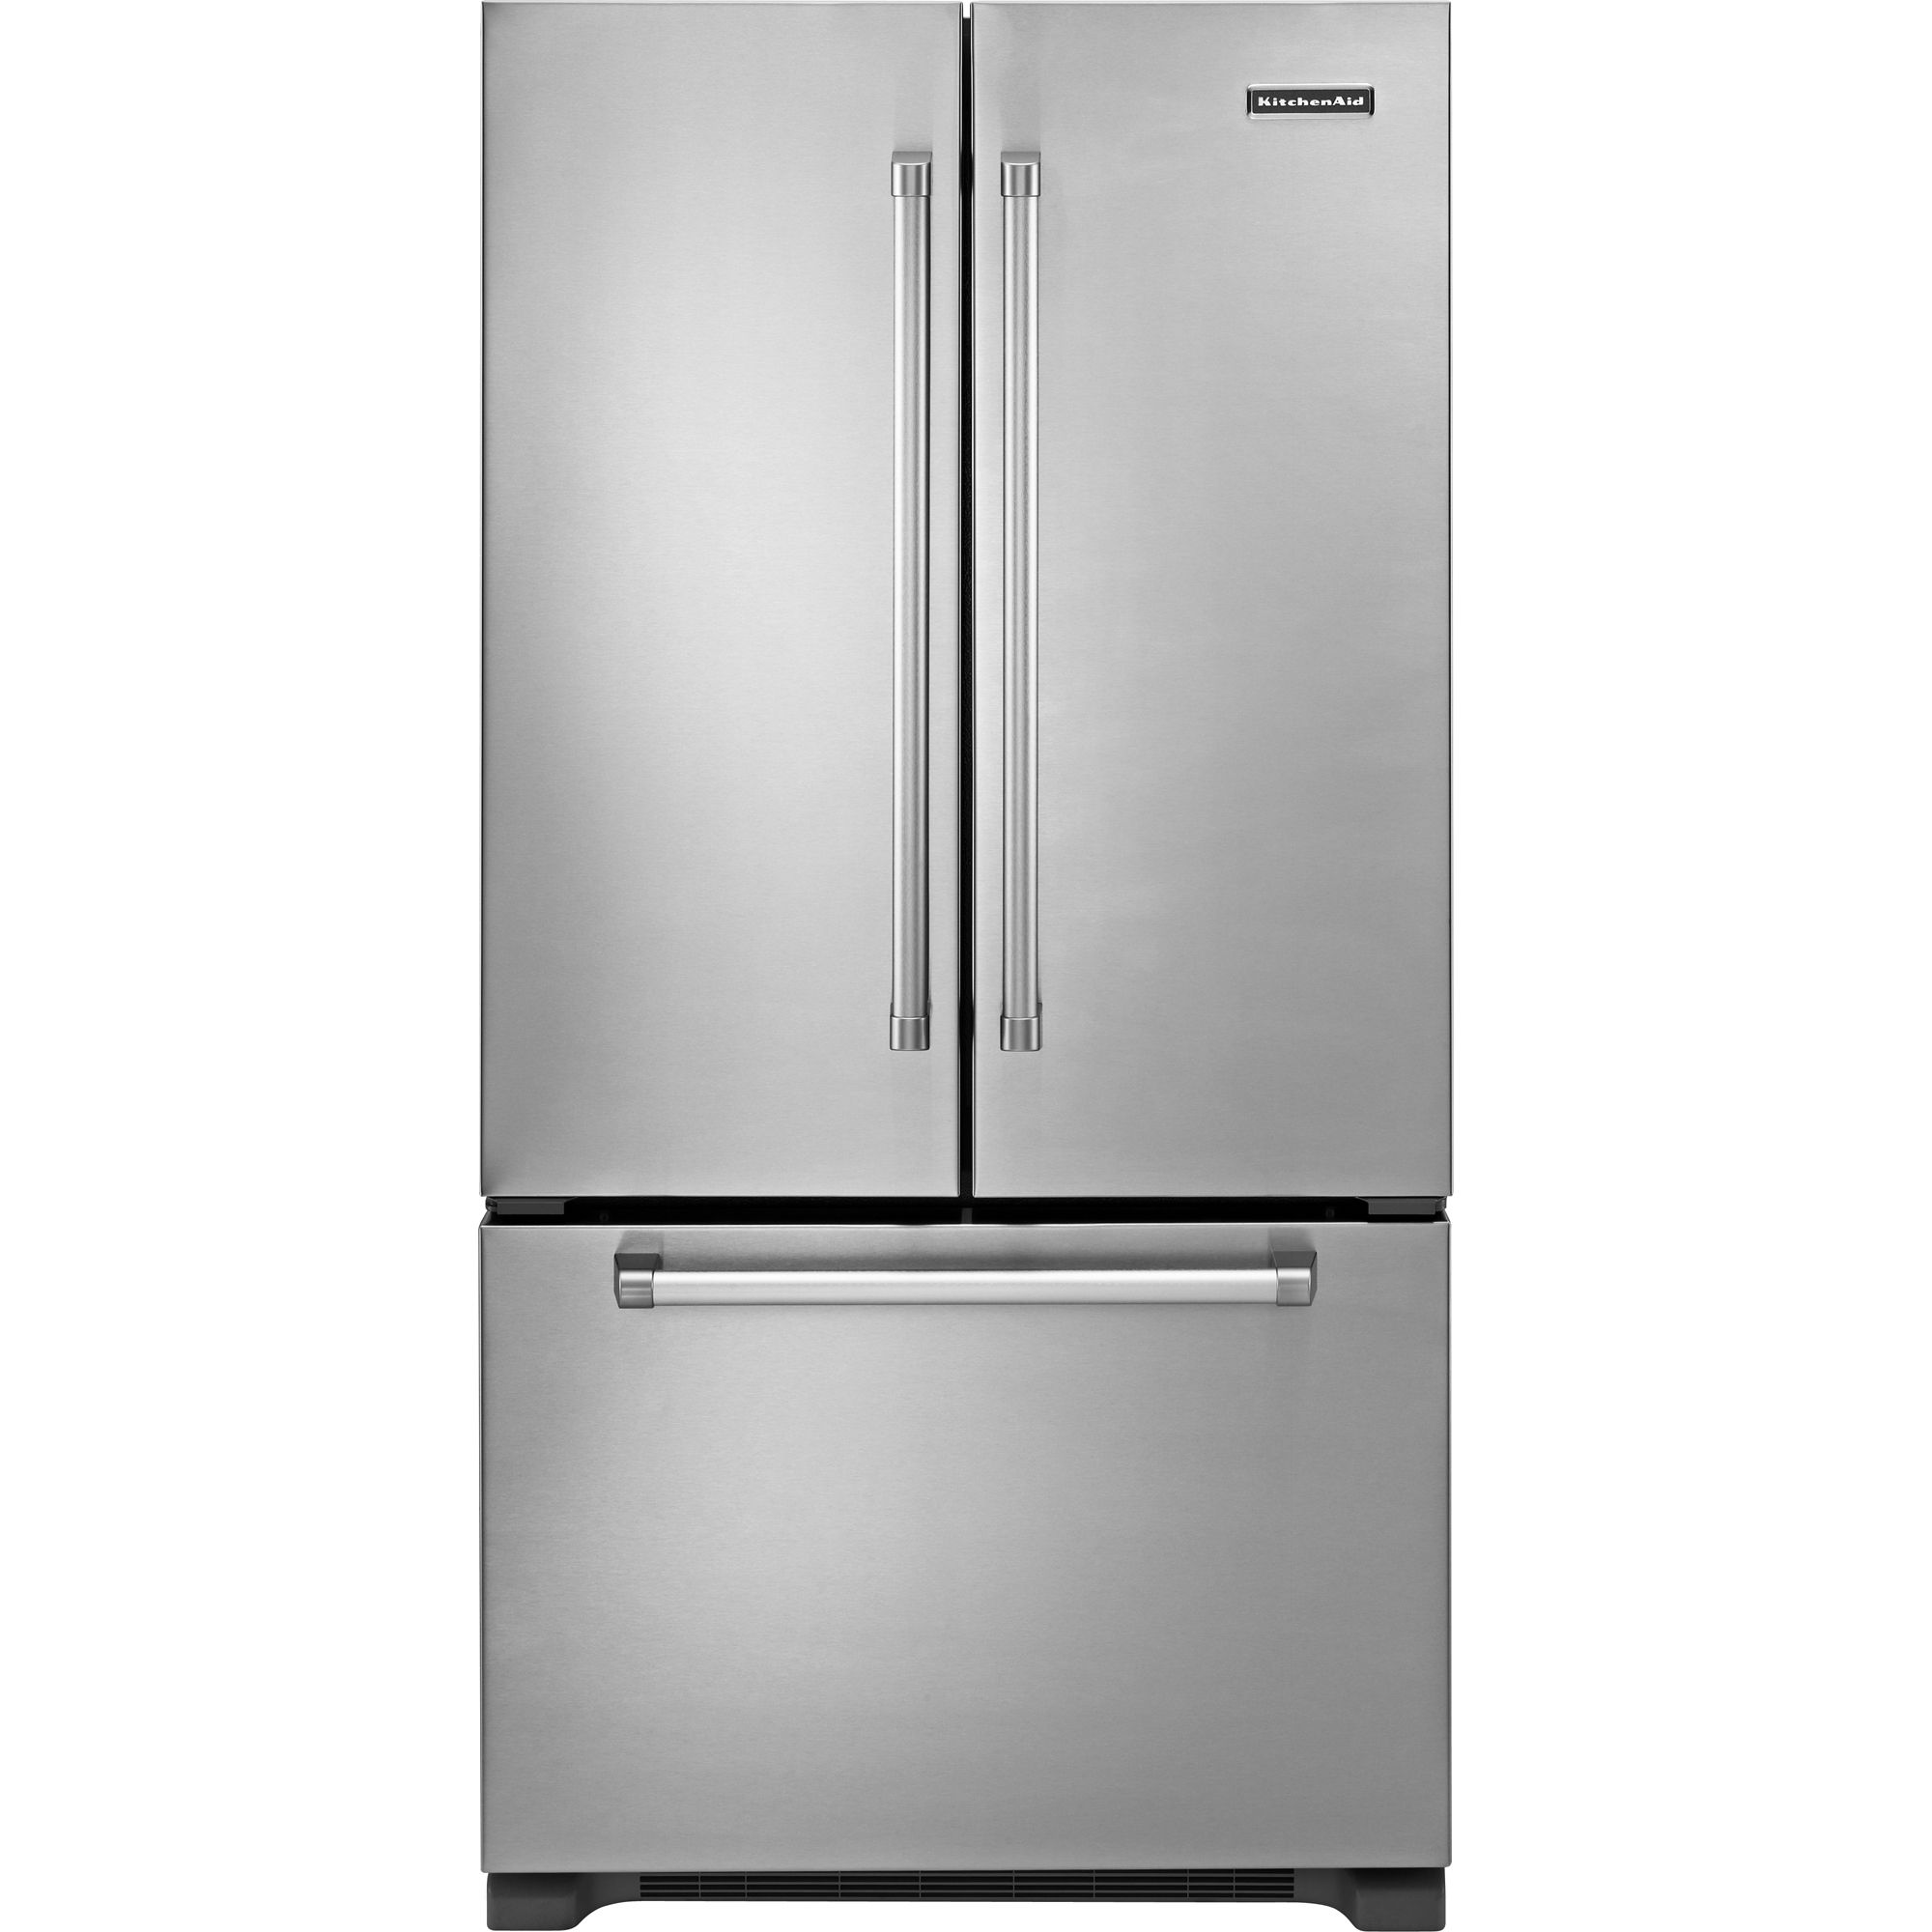 Refrigerator logo